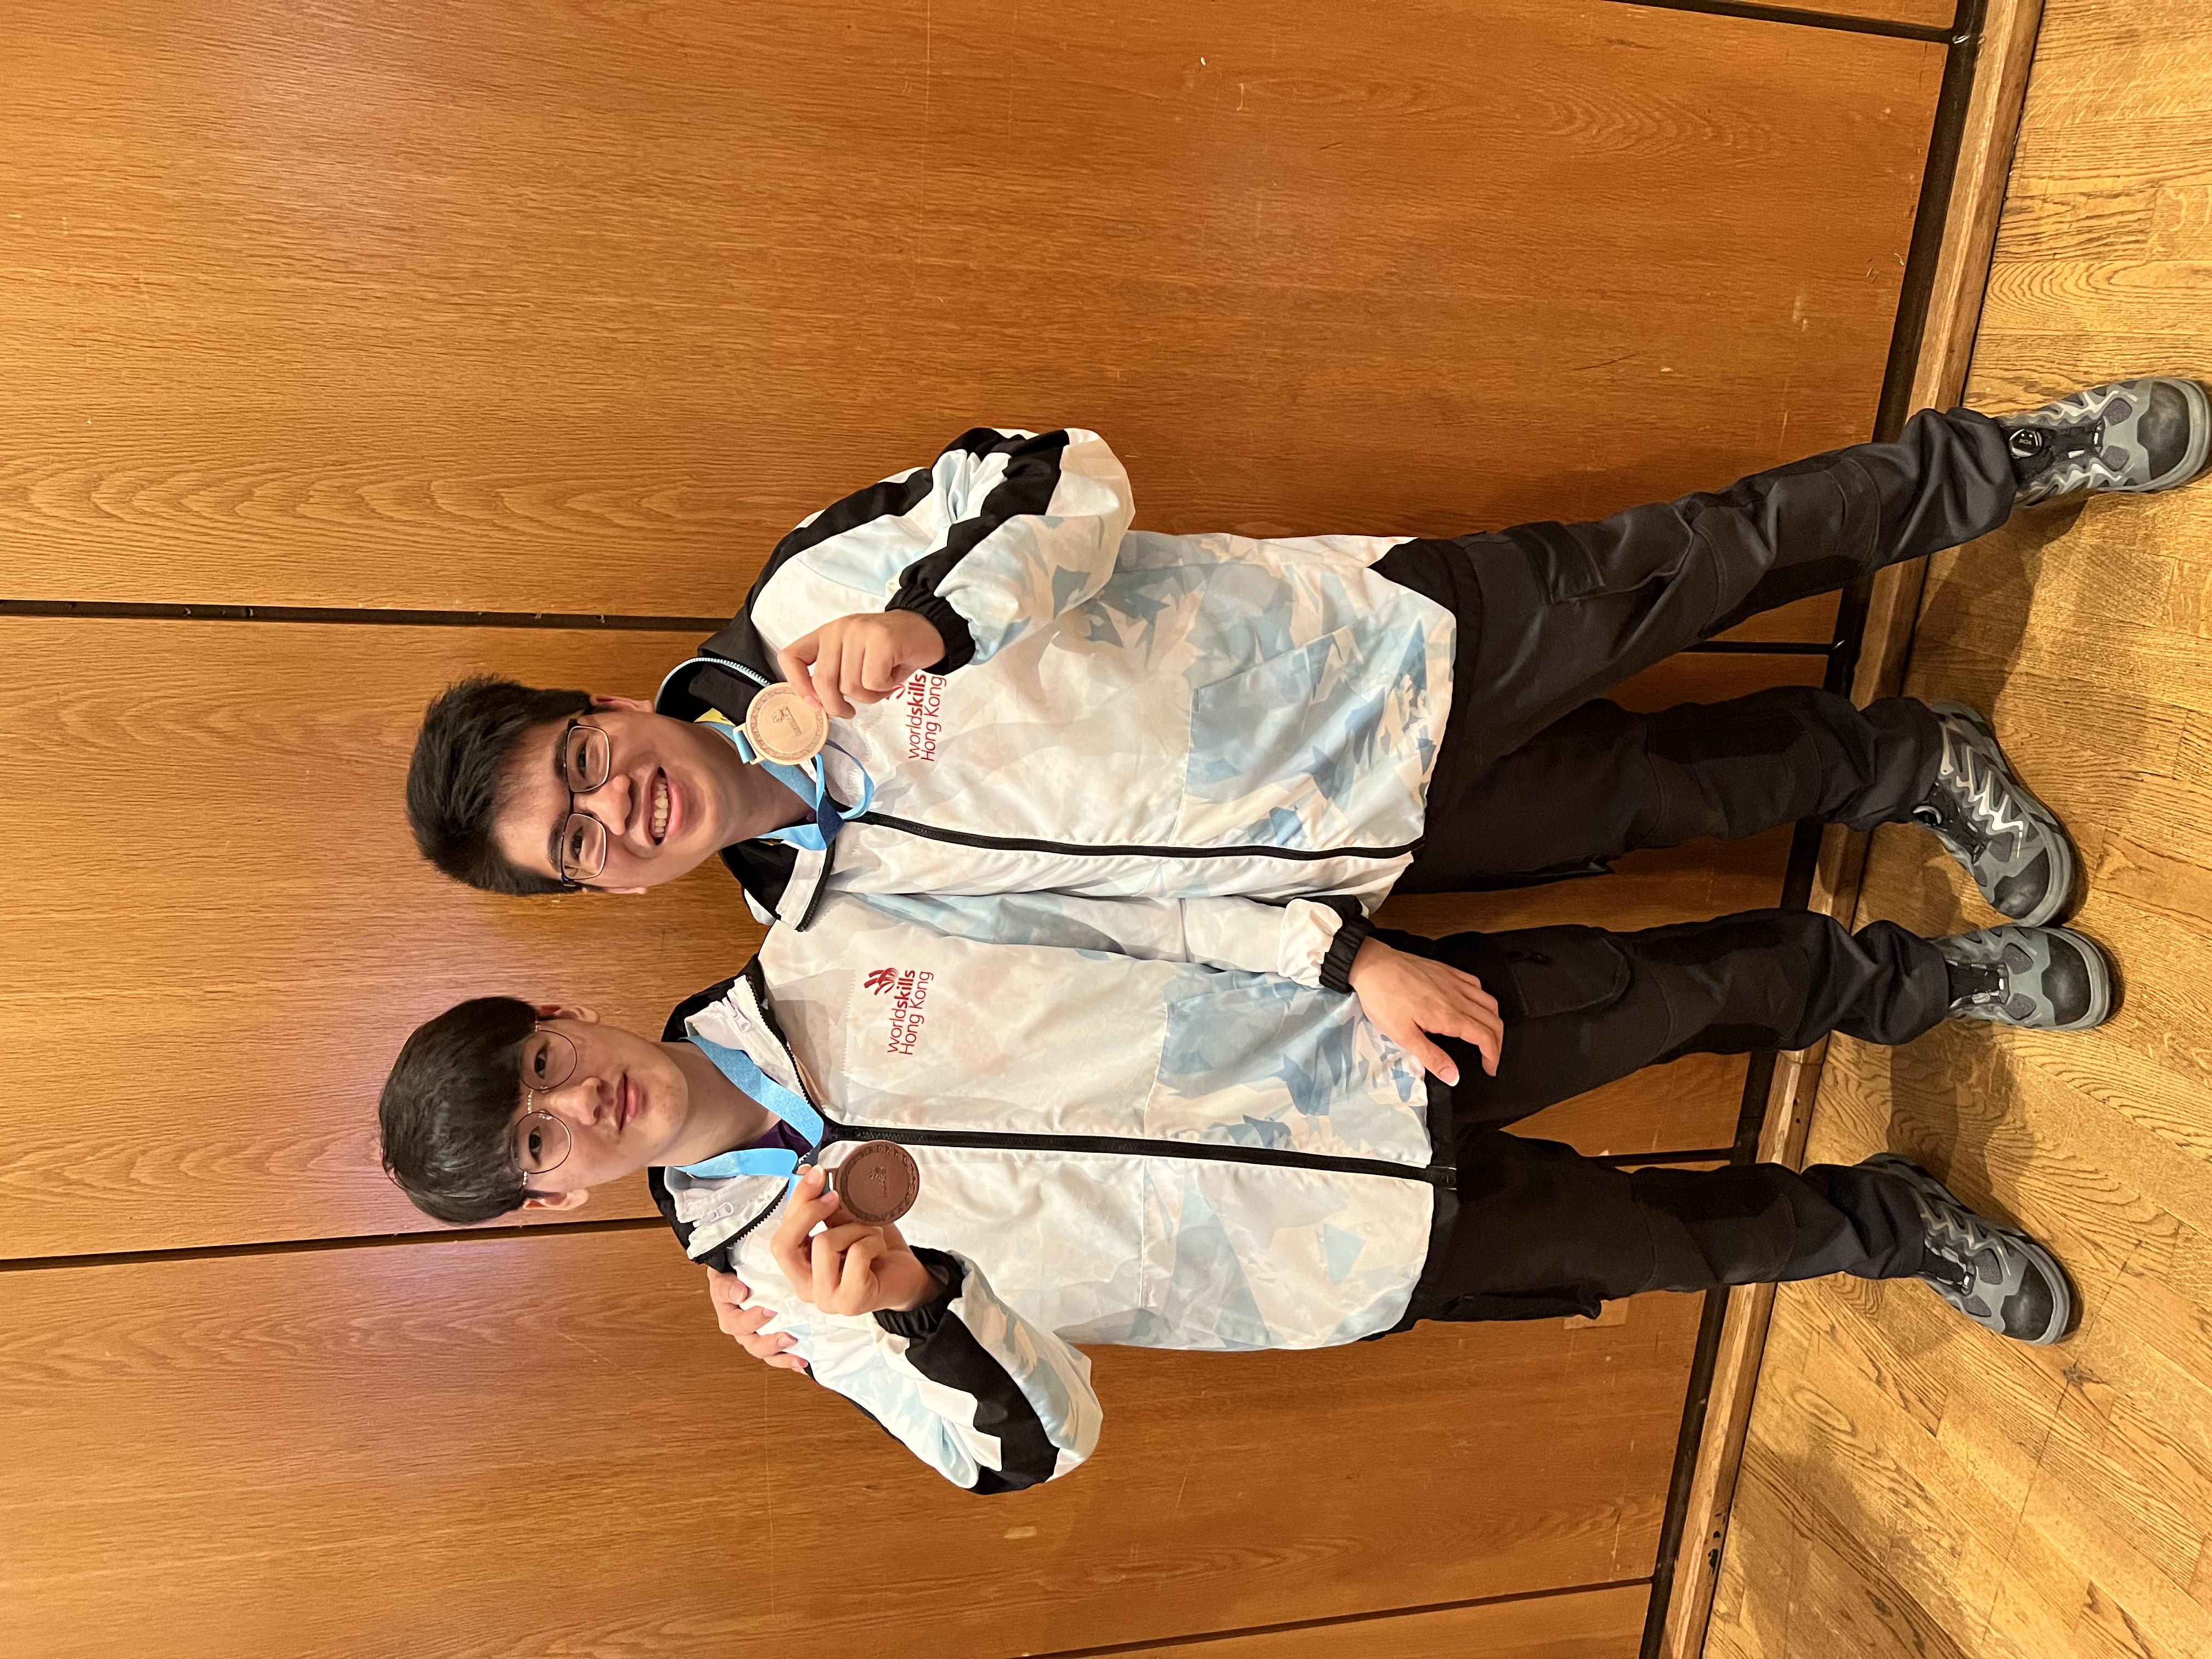 IVE機械工程學高級文憑畢業生廖俊鵬（左）及雷成發（右）先拔頭籌，在德國舉行的「2022年世界技能大賽特別賽」機電一體化項目獲得優異獎章